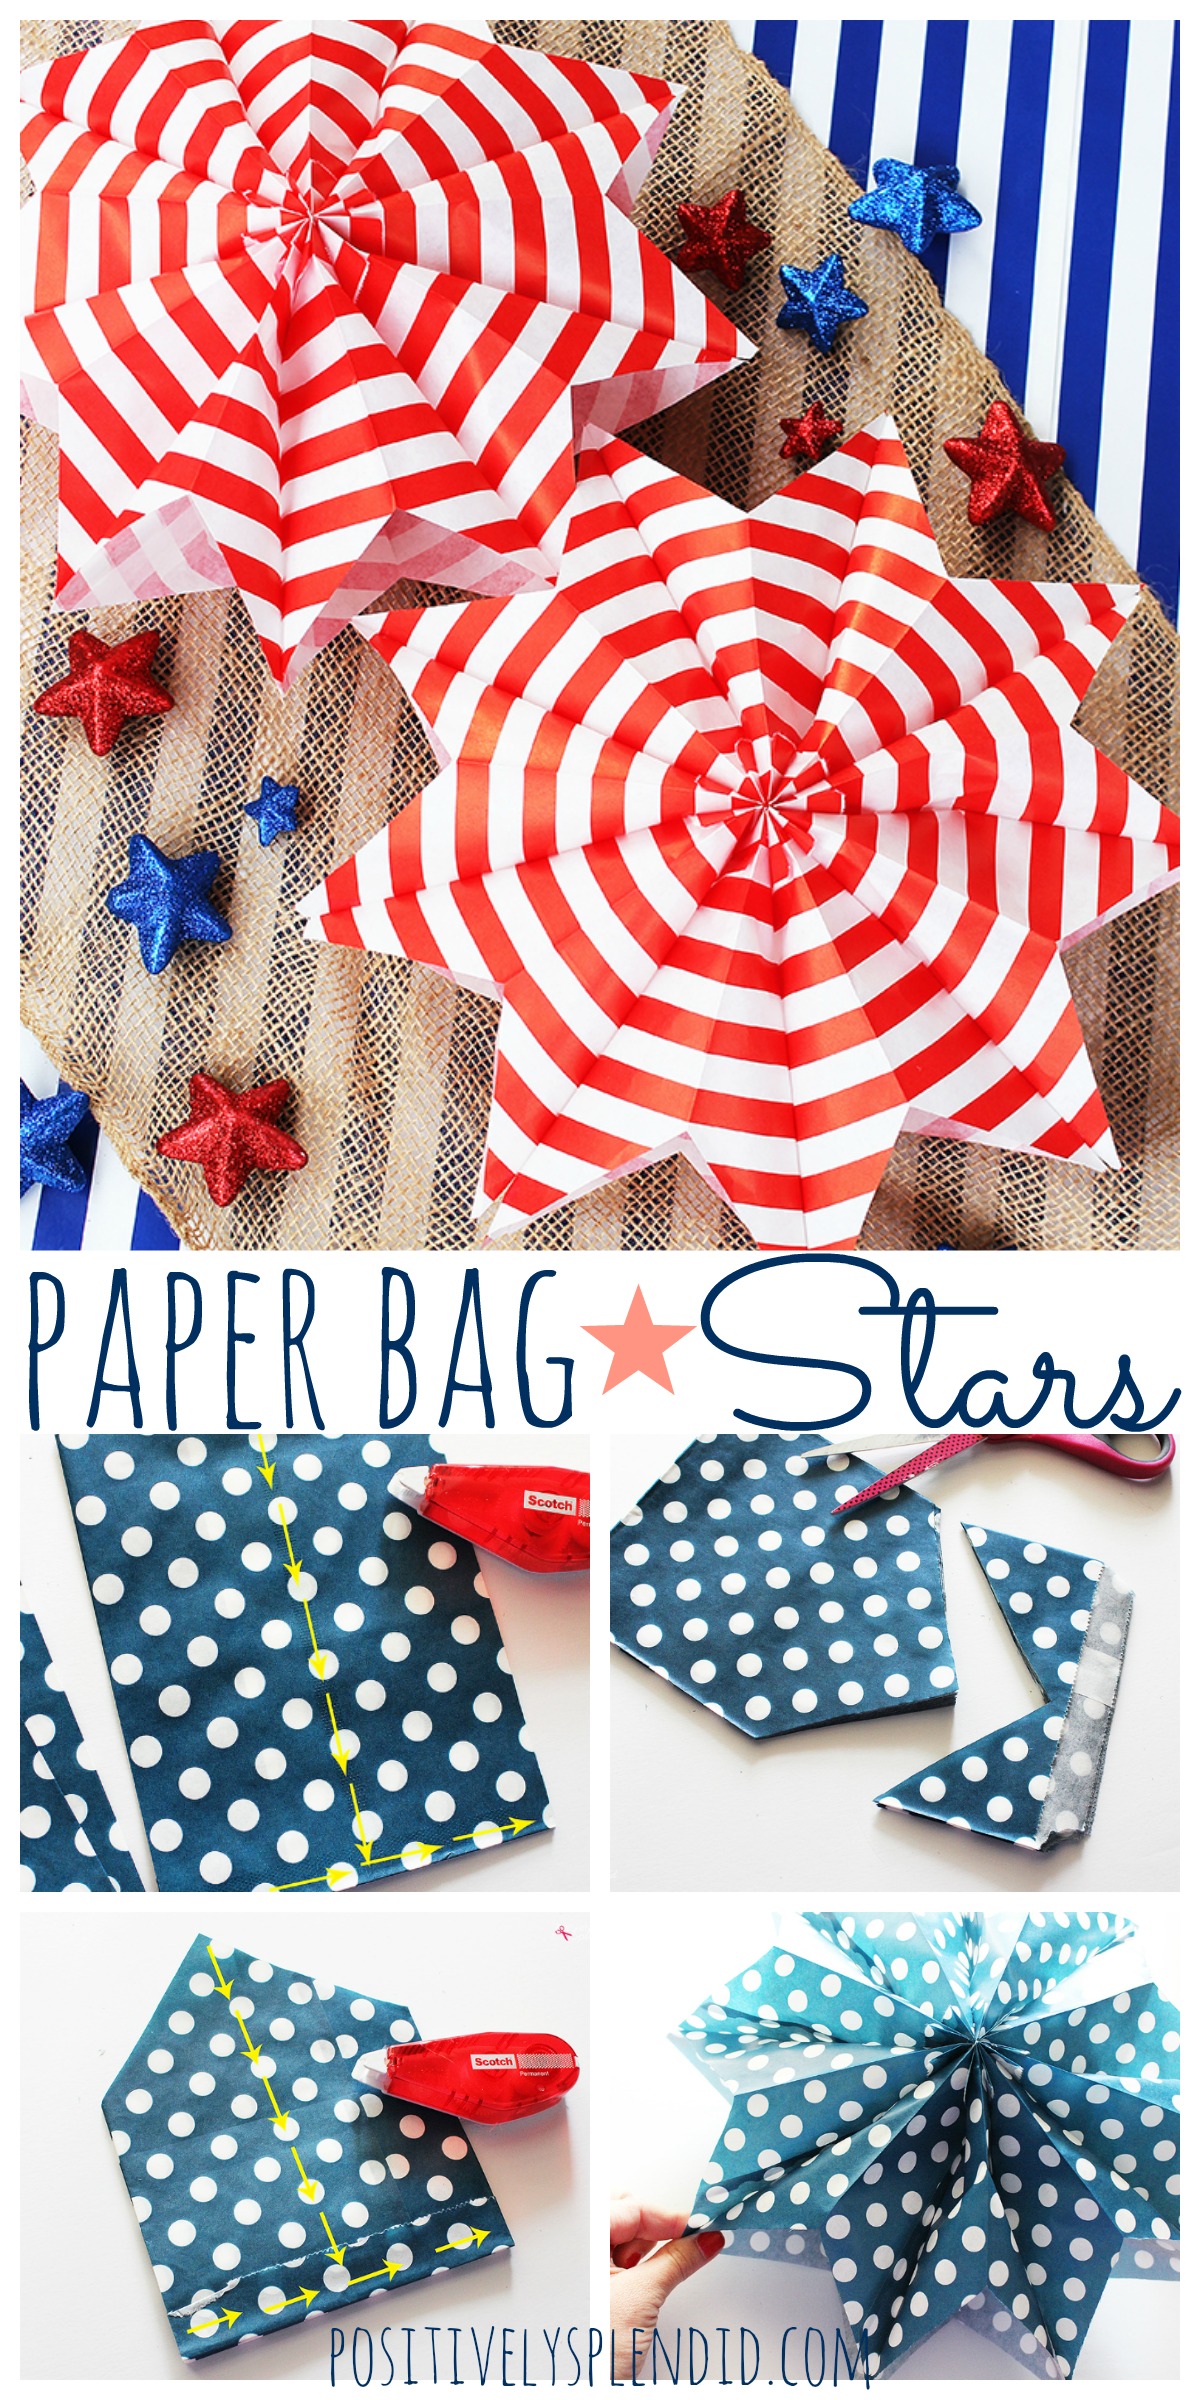 DIY Paper Bag Stars - So easy and fun to make!